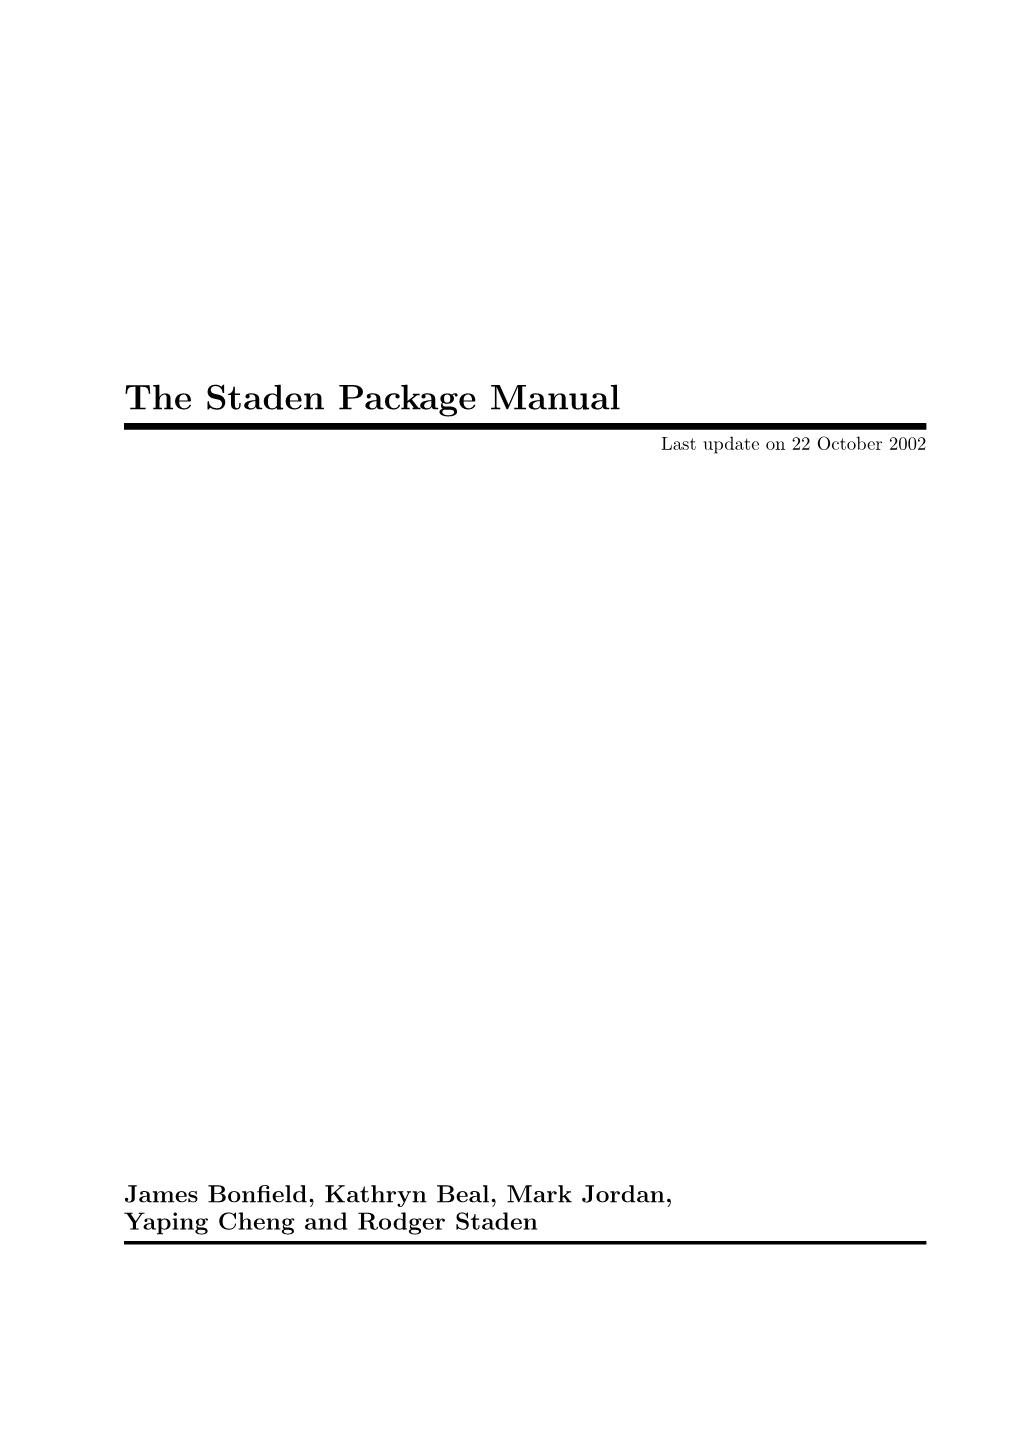 The Staden Package Manual Last Update on 22 October 2002